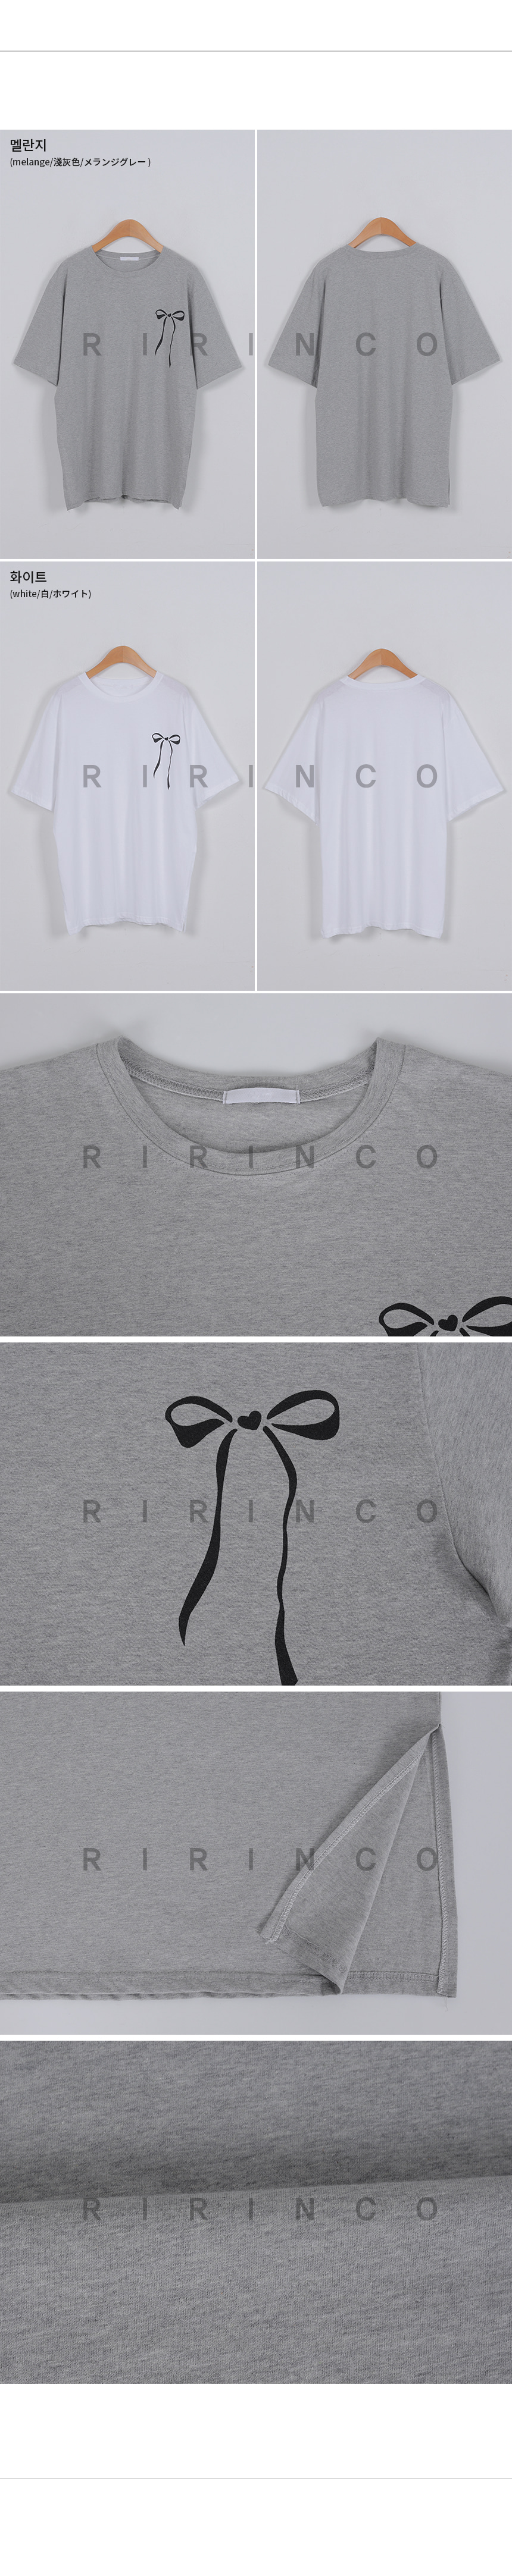 RIRINCO リボンプリント半袖ラウンドネックTシャツ